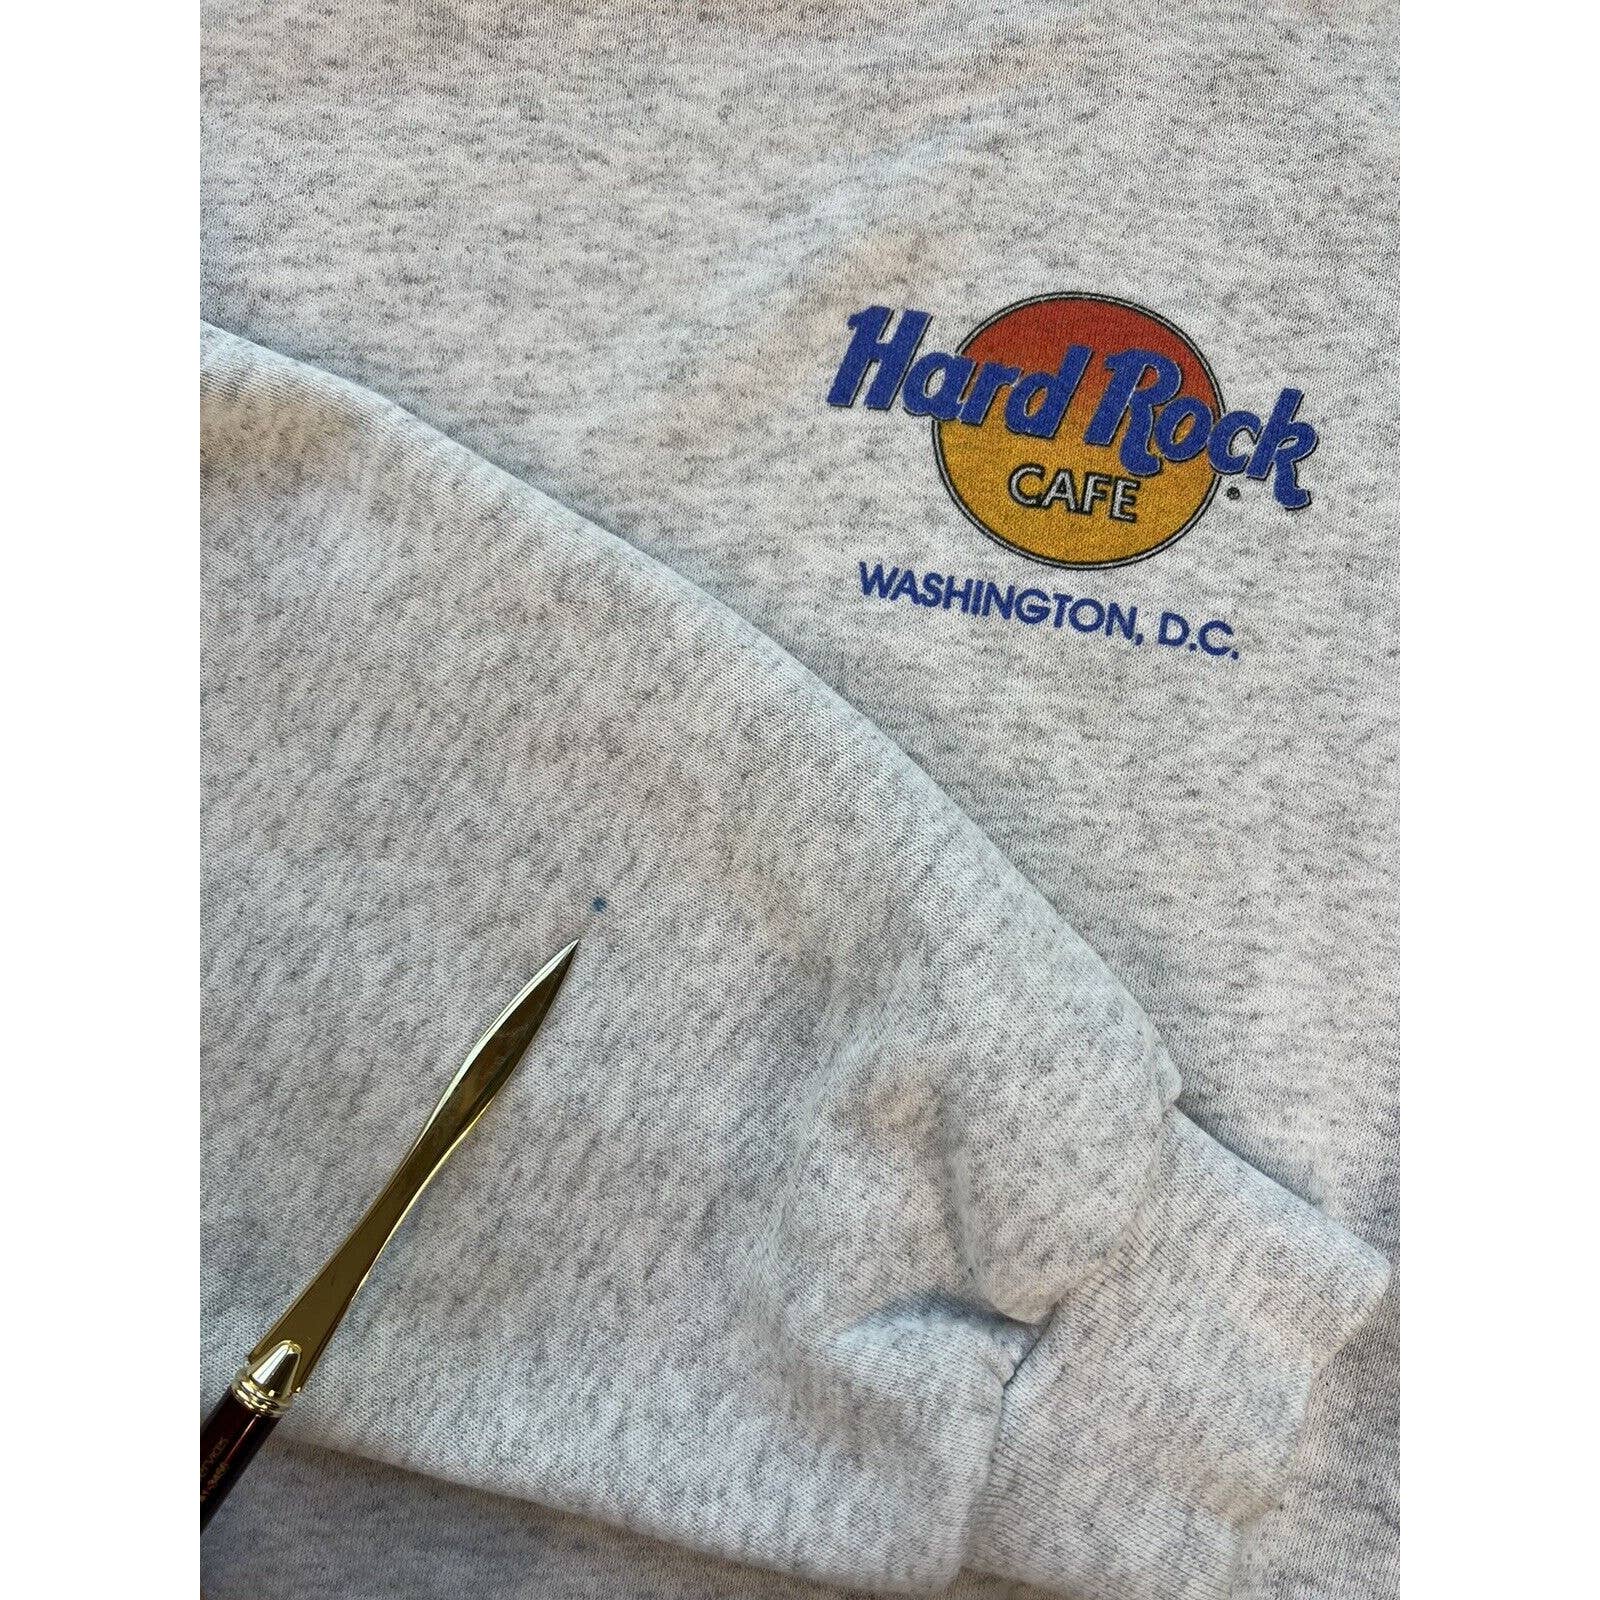 Hard Rock Cafe Sweatshirt Size Medium Washington DC All Is One Crewneck Gray